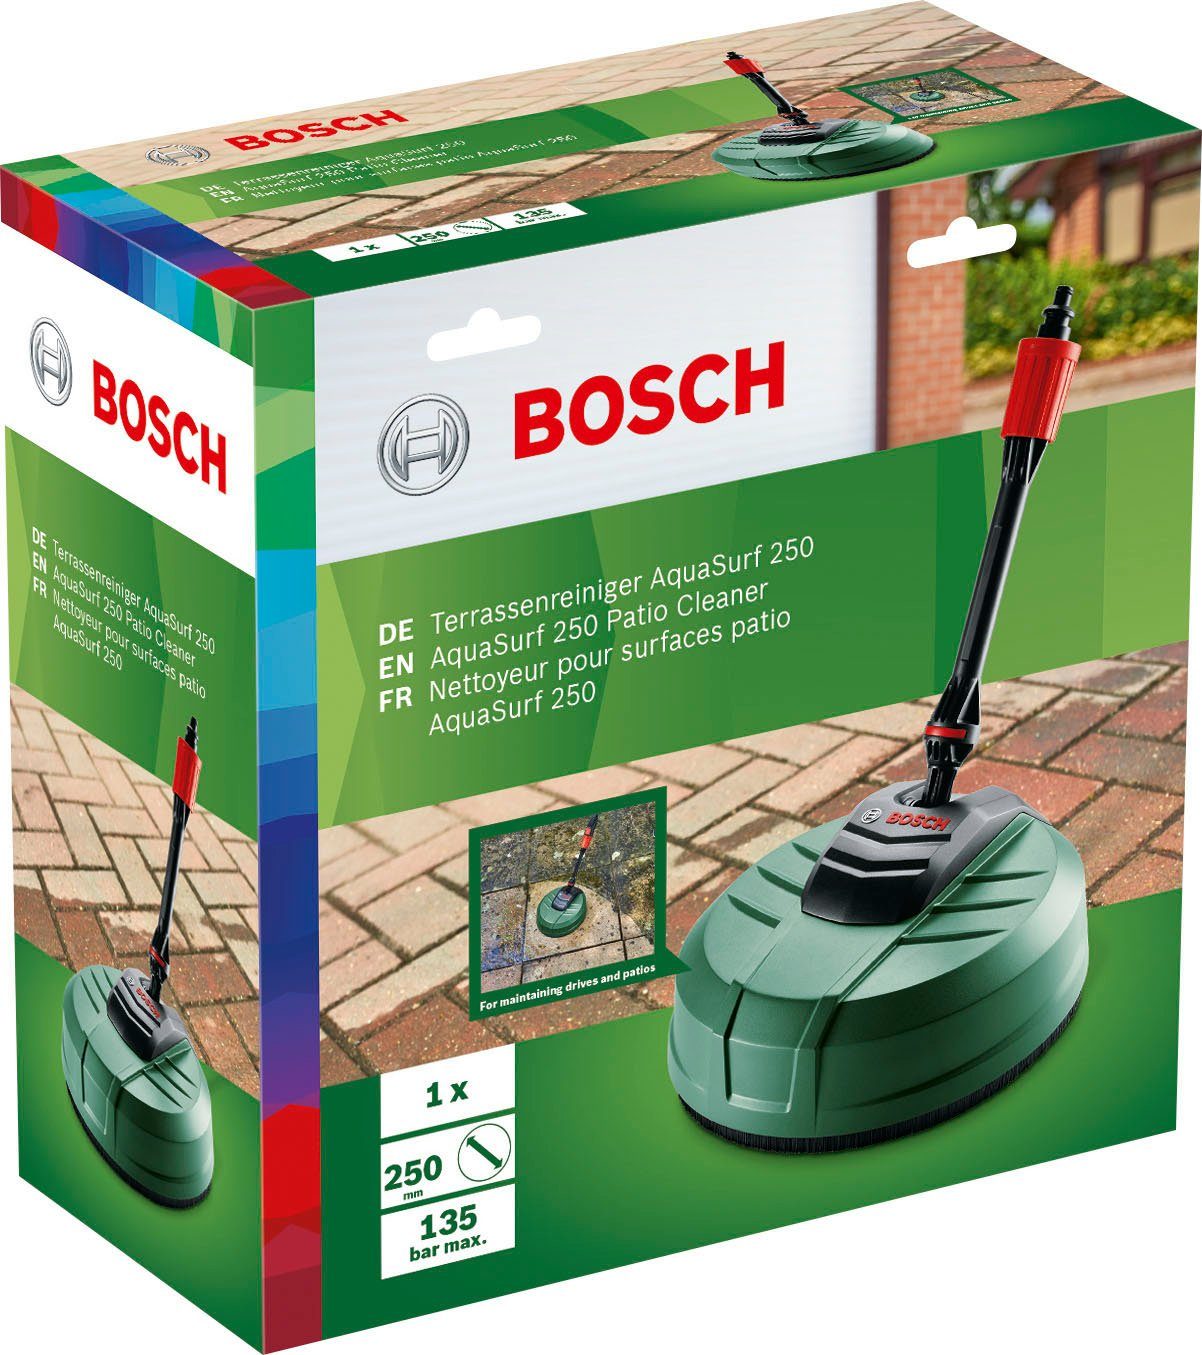 Bosch Garden & Home 250 Terrassenreiniger Aquasurf Flächenreiniger